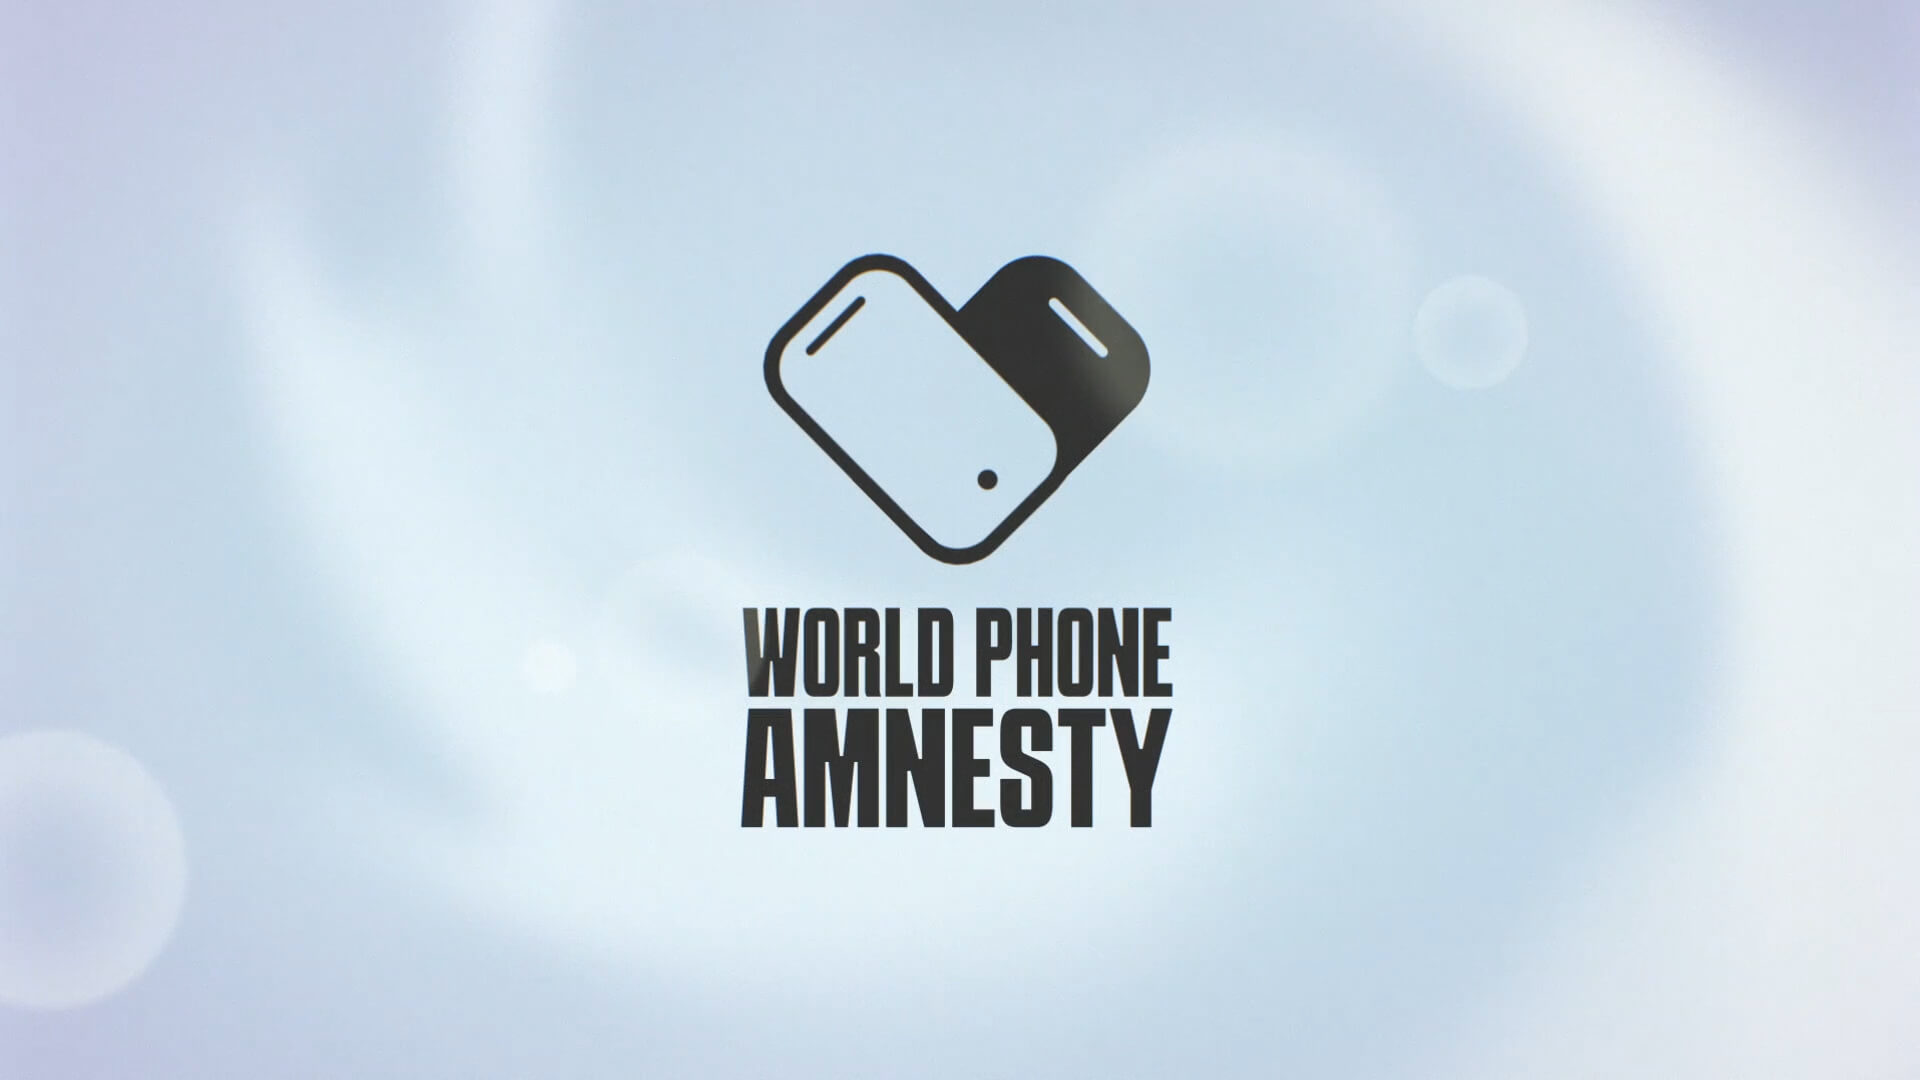 The World Phone Amnesty logo on a grey background.